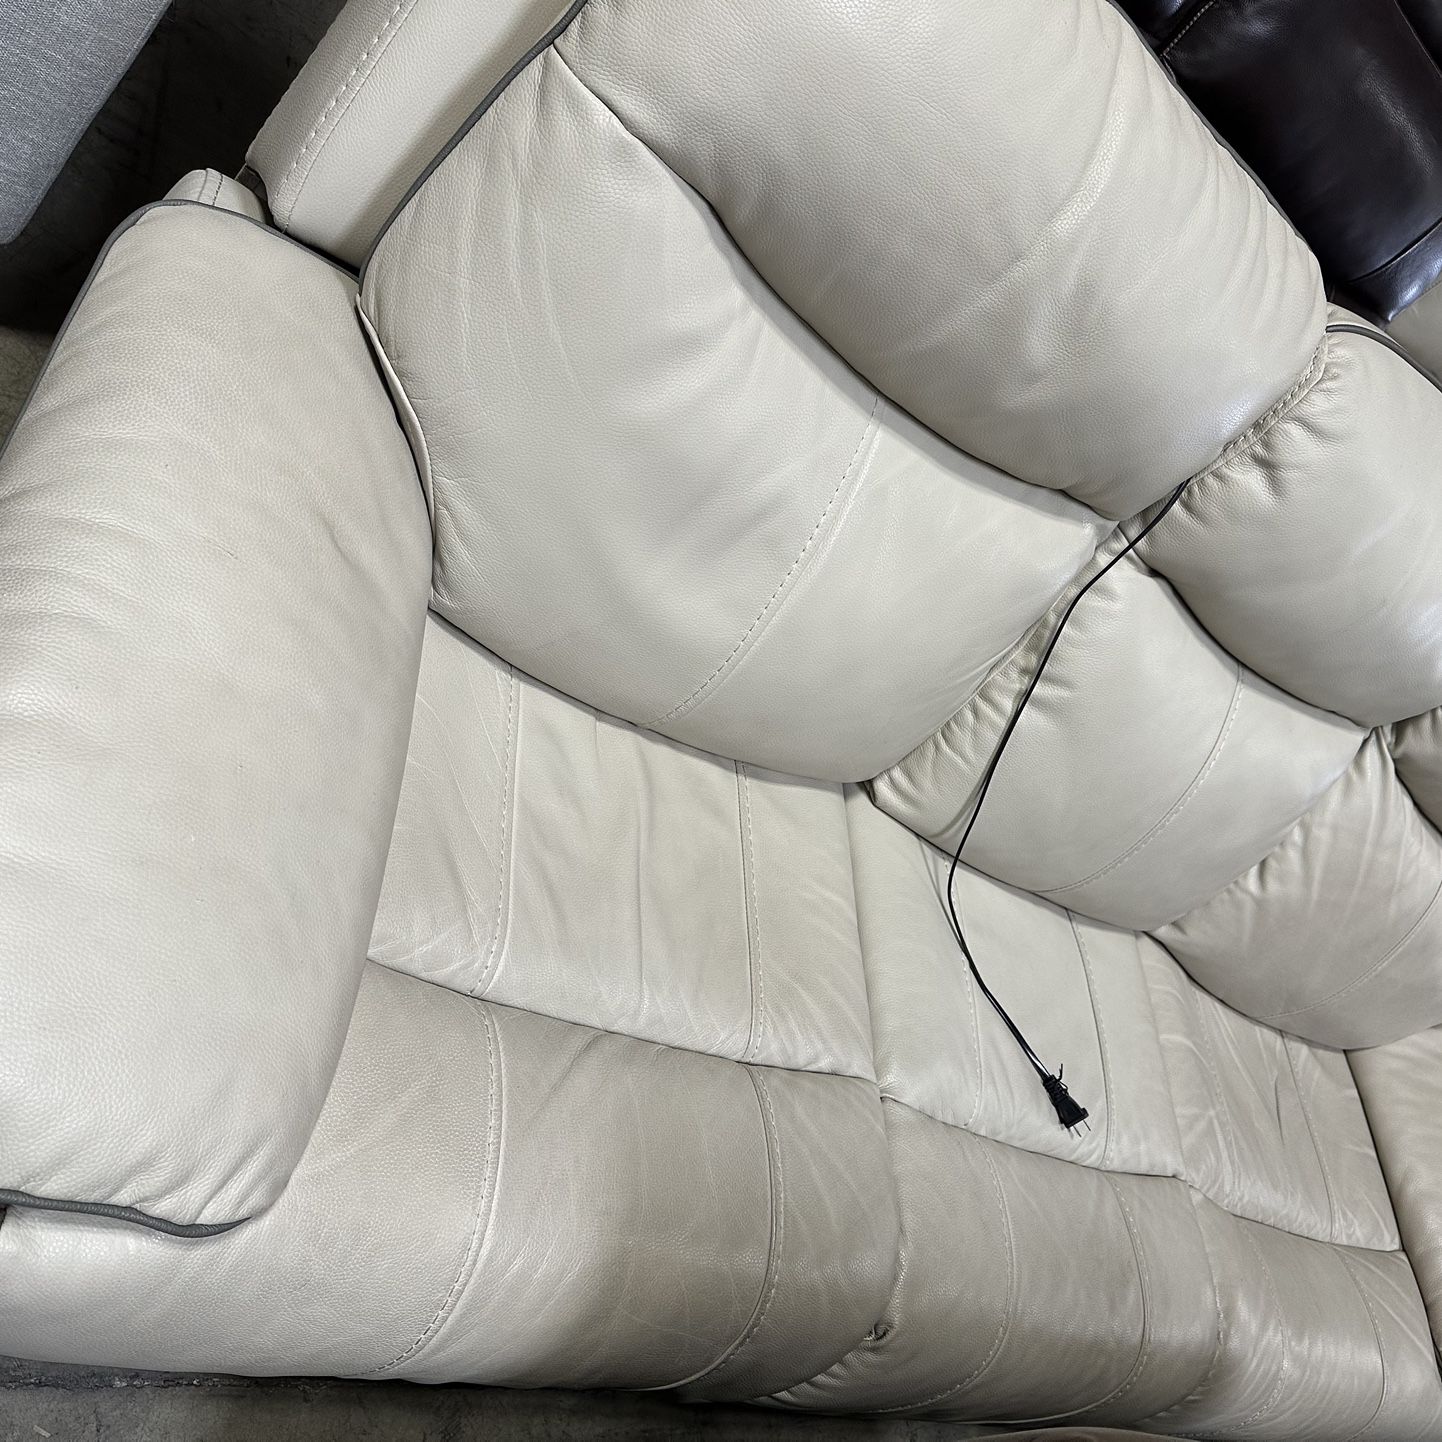 Leather Power Sofa&Loveseat Set; $200